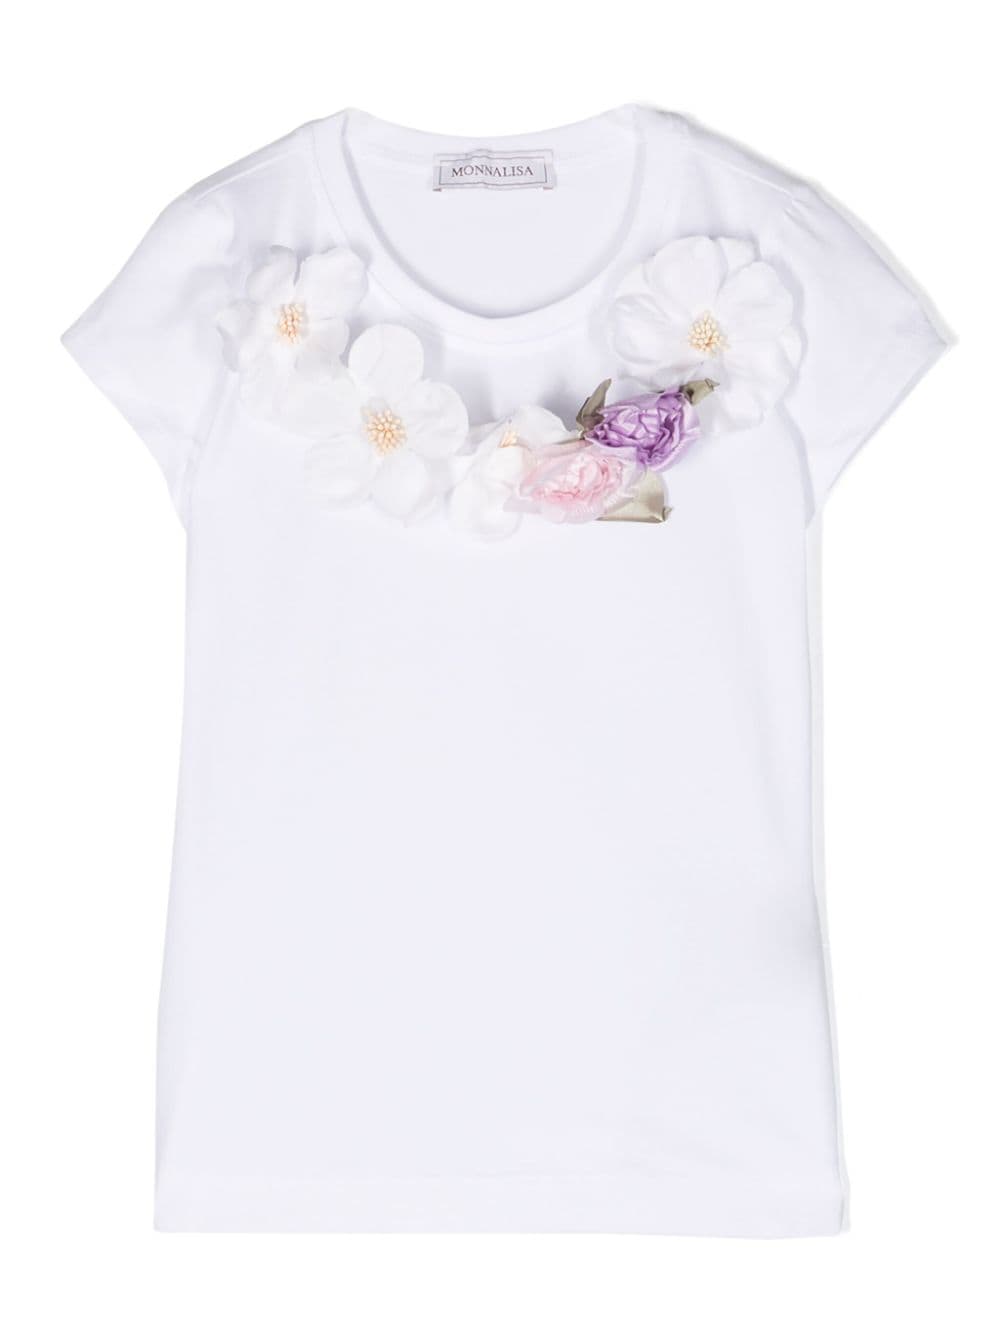 Monnalisa t-shirt con fiori